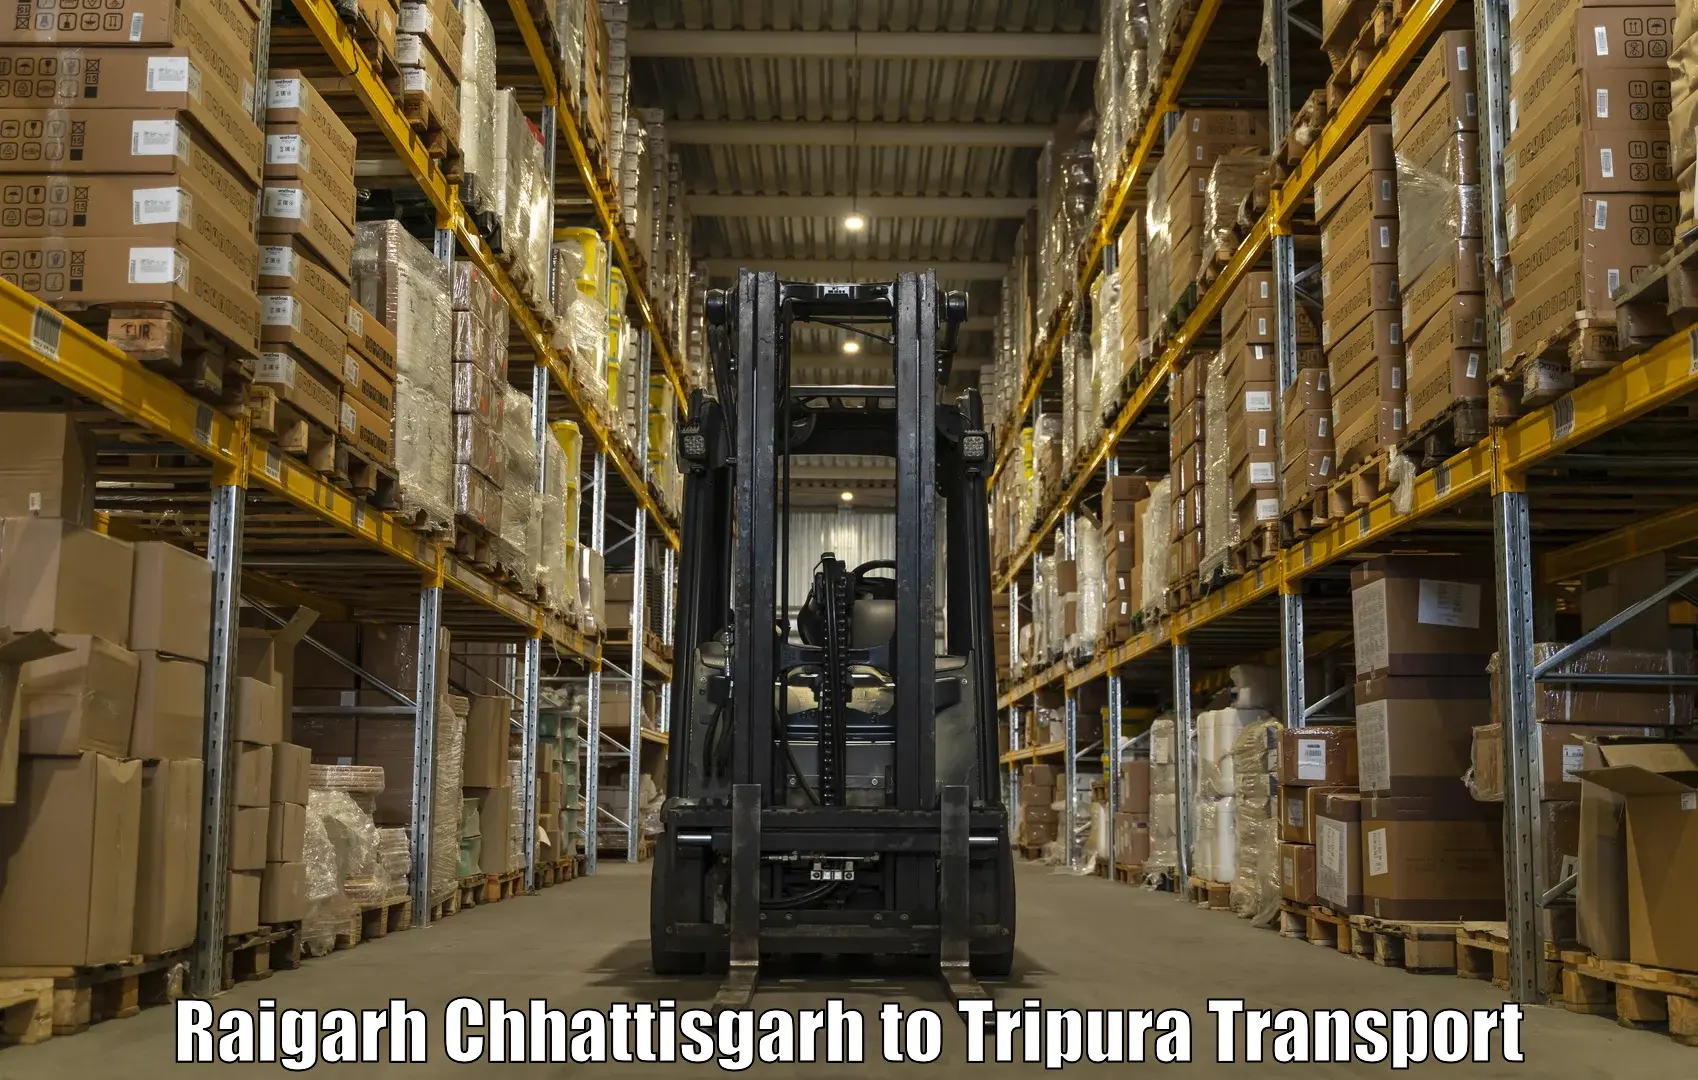 Transport in sharing Raigarh Chhattisgarh to Udaipur Tripura